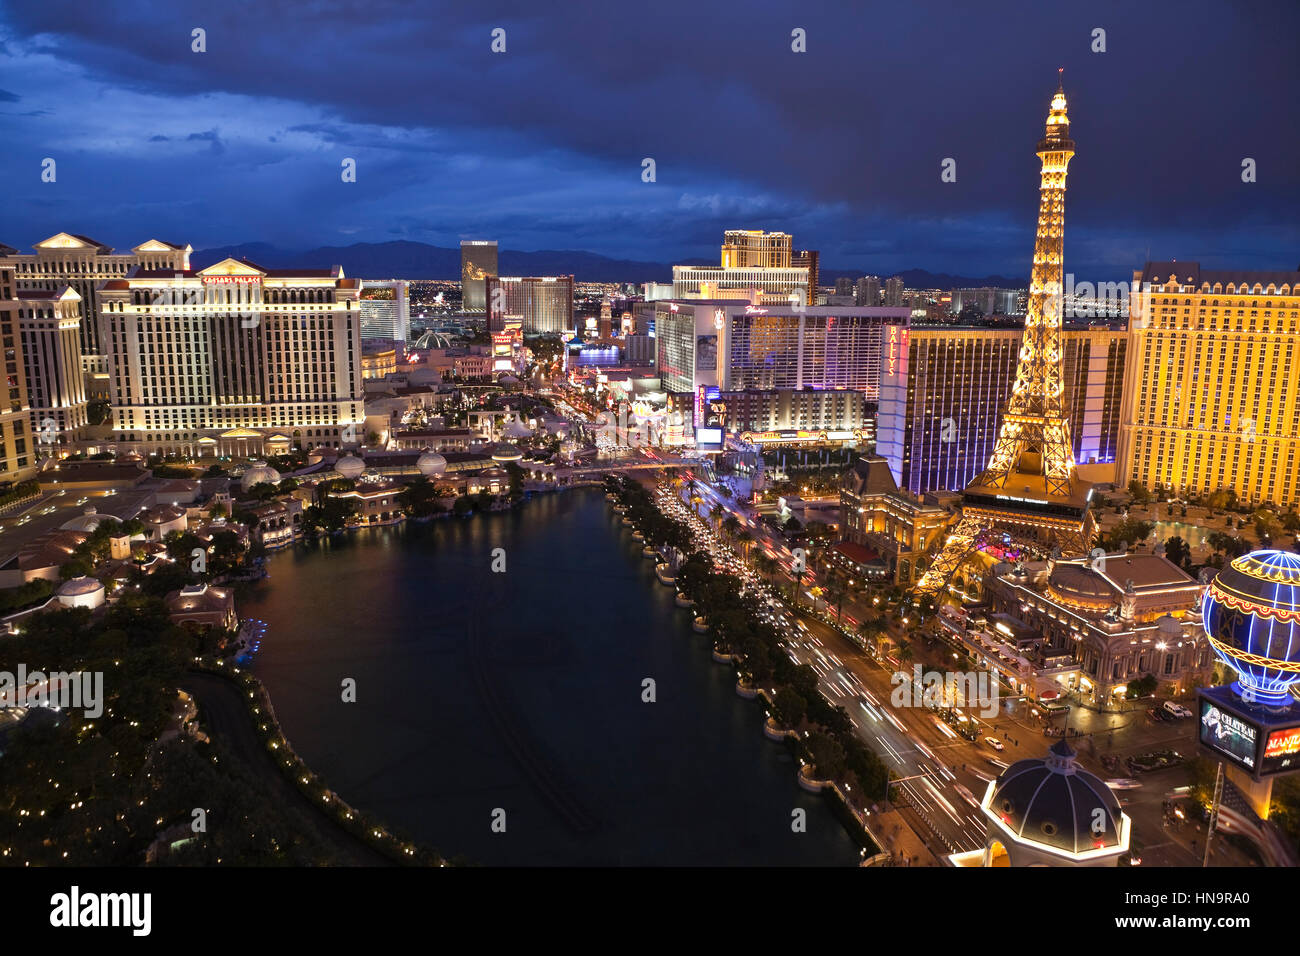 Las Vegas, Nevada, USA - 6. Oktober 2011: Nacht Blick auf Bellagio, Paris, Caesars Palace und anderen Resorts am Las Vegas Strip. Stockfoto